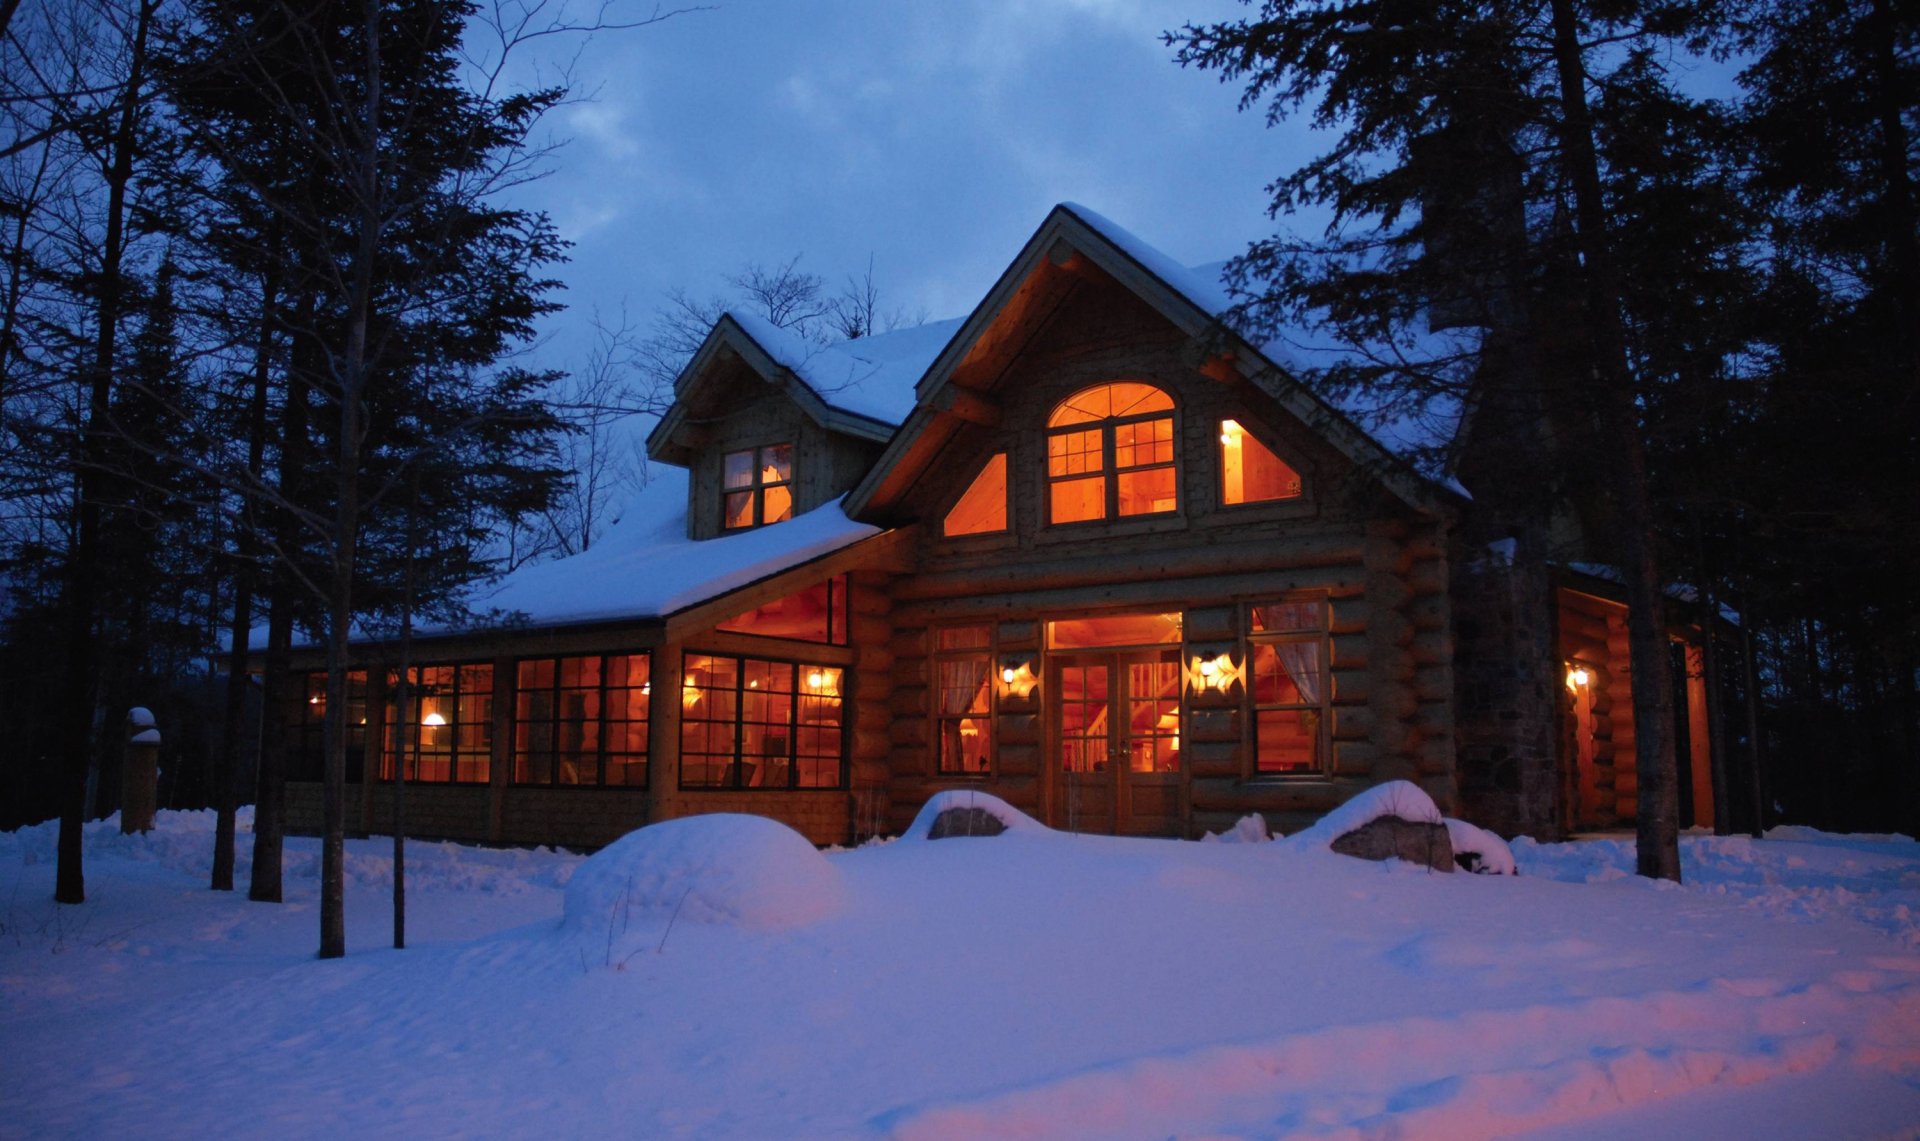 Download Night Snow Winter Light Man Made House HD Wallpaper